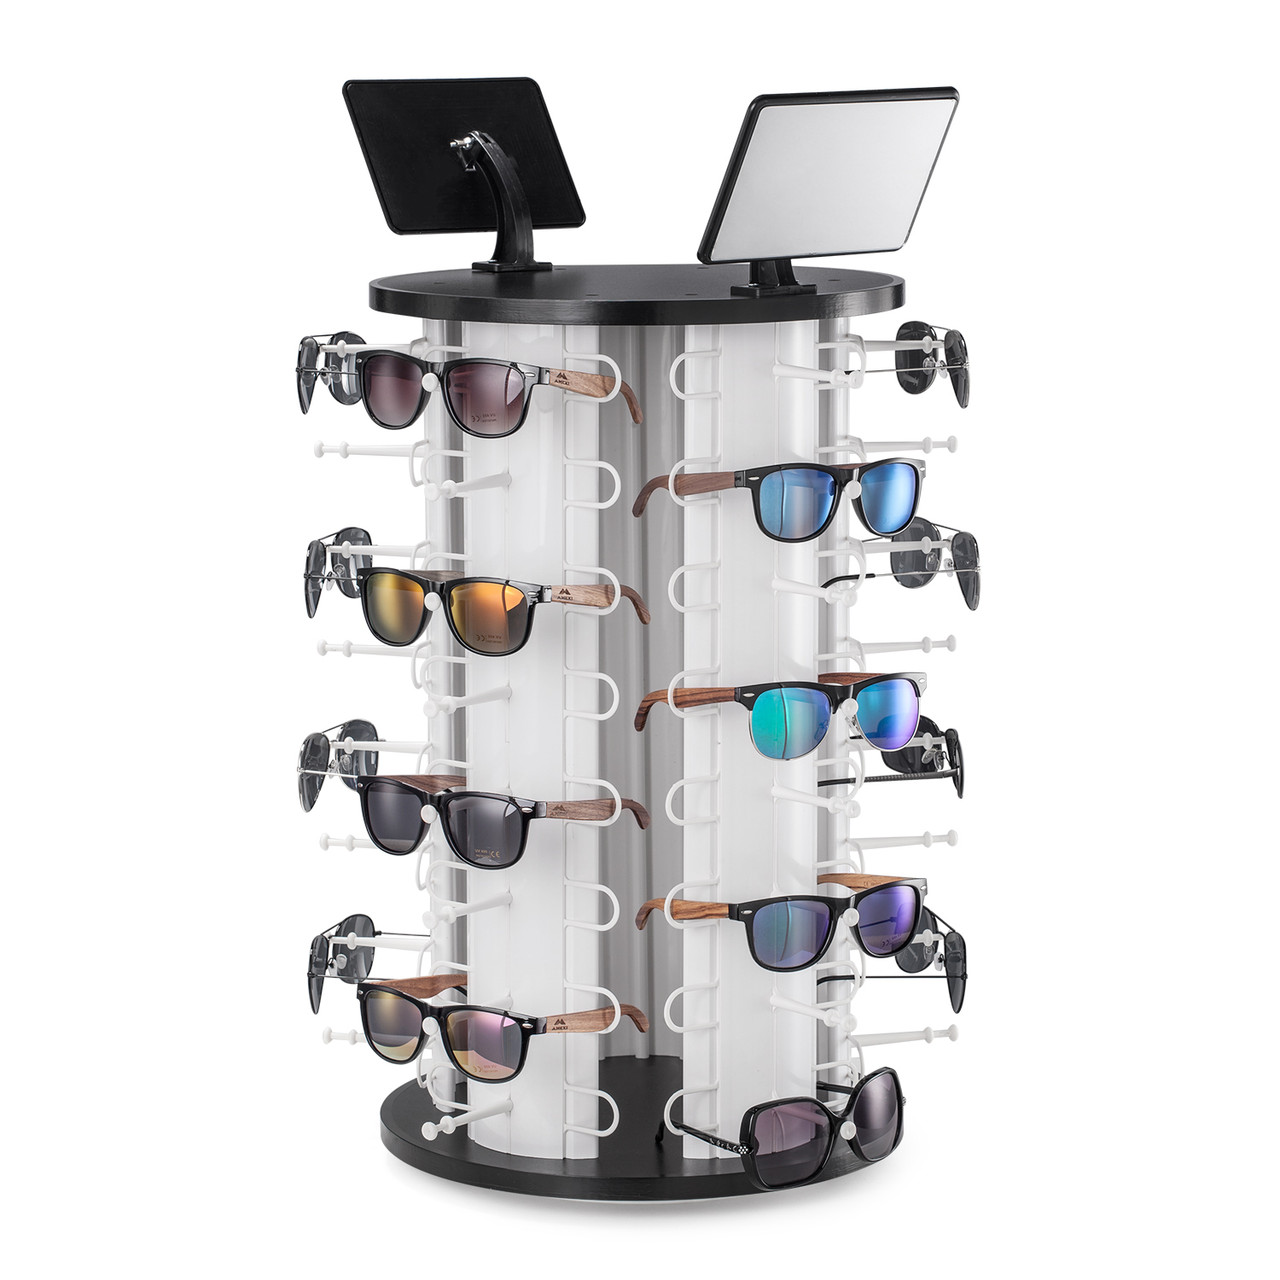 2 NEW YELLOW 6 PAIR SUNGLASS DISPLAY RACK  holder glasses counter displays racks 